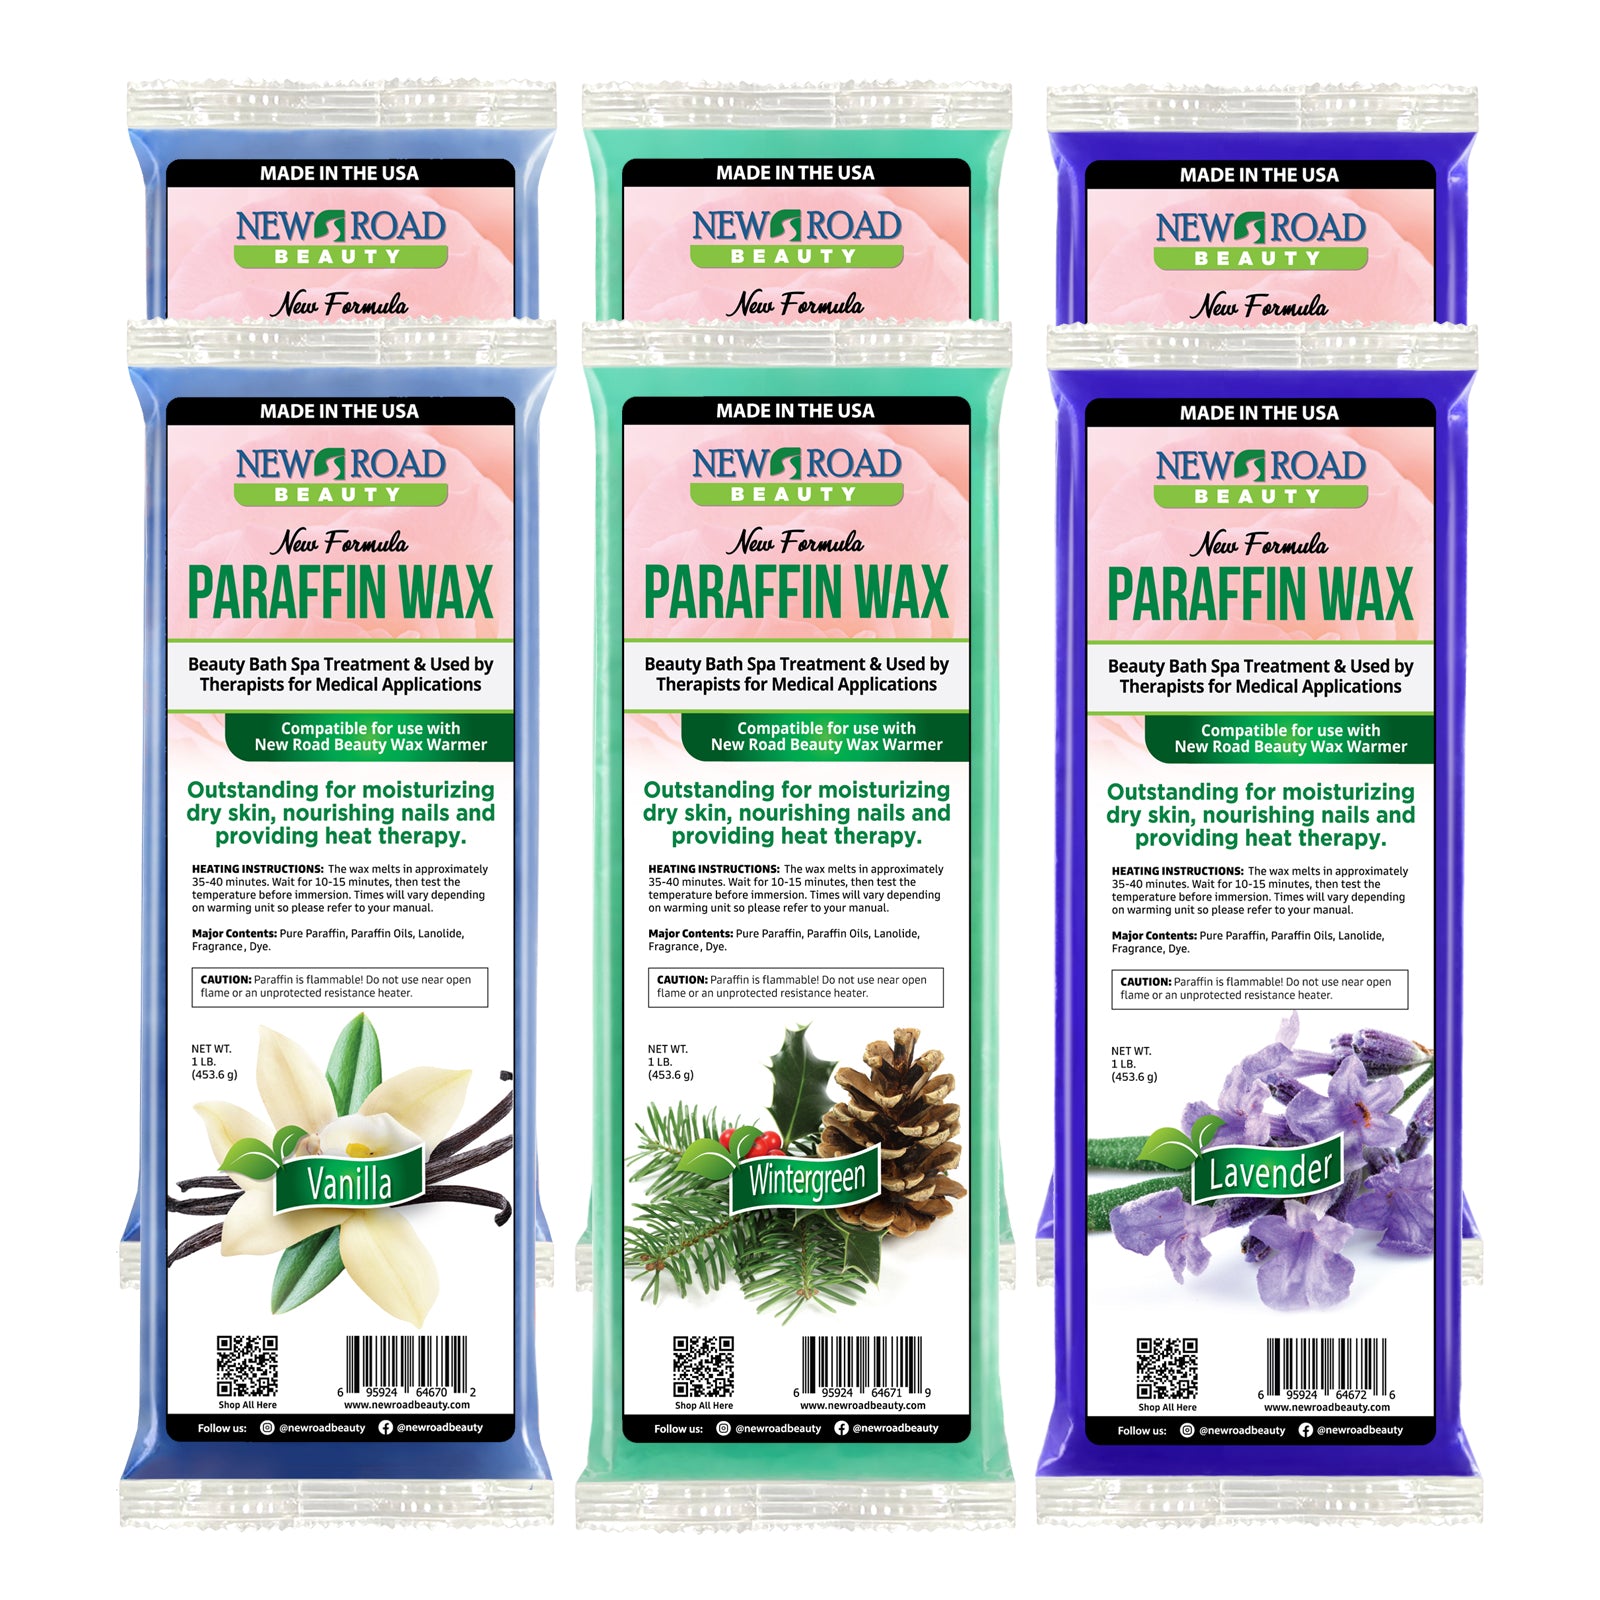 Combo 6-Pack Paraffin Wax For Soft, Moisturized Skin - Vanilla, Wintergreen, and Lavender Paraffin Wax  Edit alt text